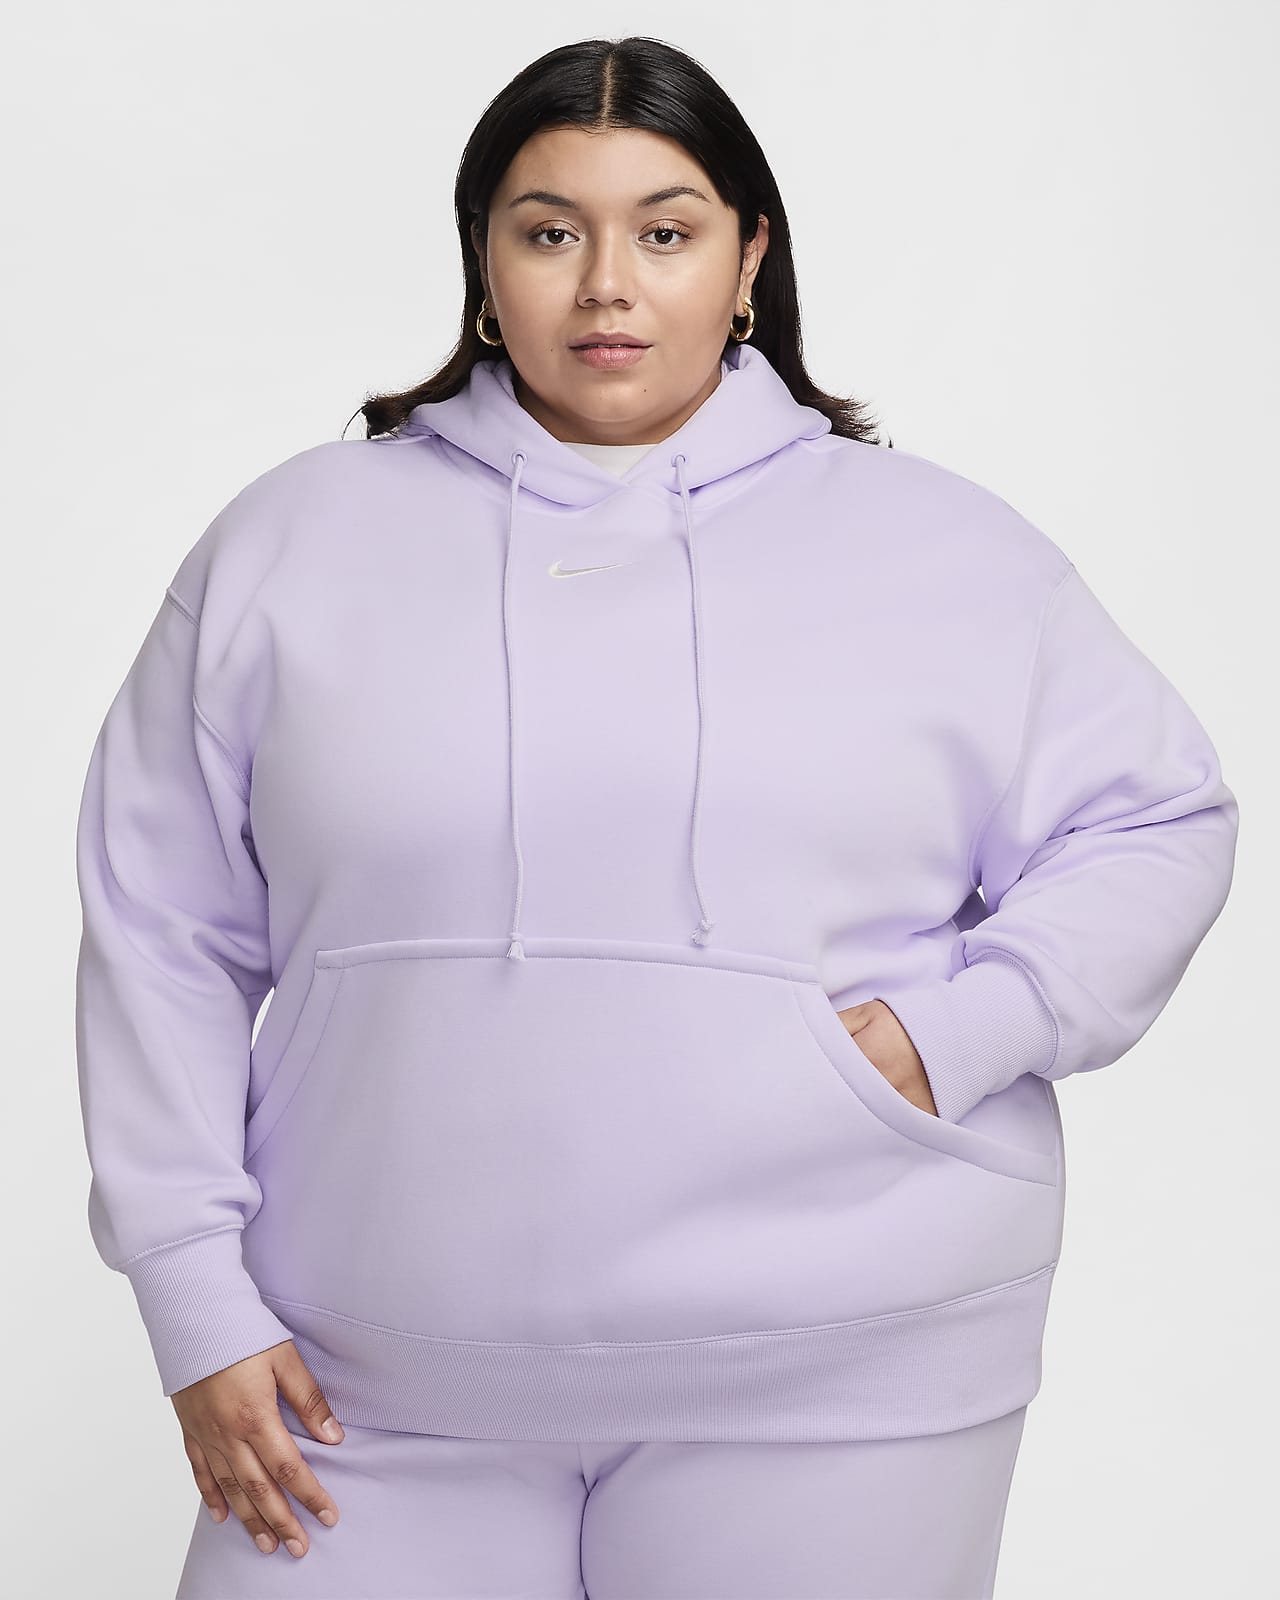 Huvtröja i oversize-modell Nike Sportswear Phoenix Fleece för kvinnor (Plus Size)